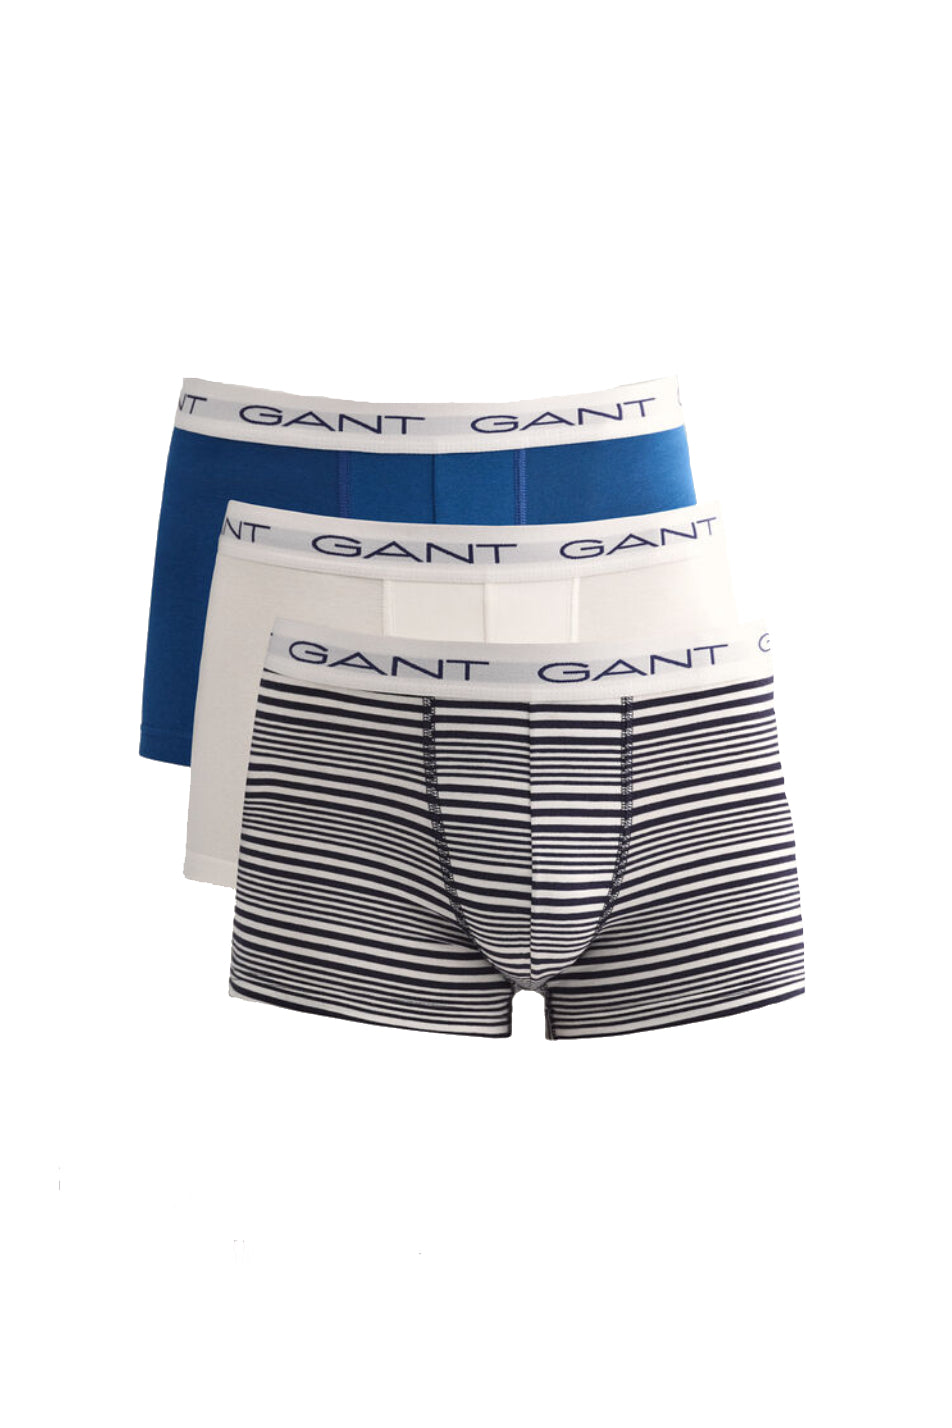 Gant 3 Pack Men's Maritime Striped Trunk